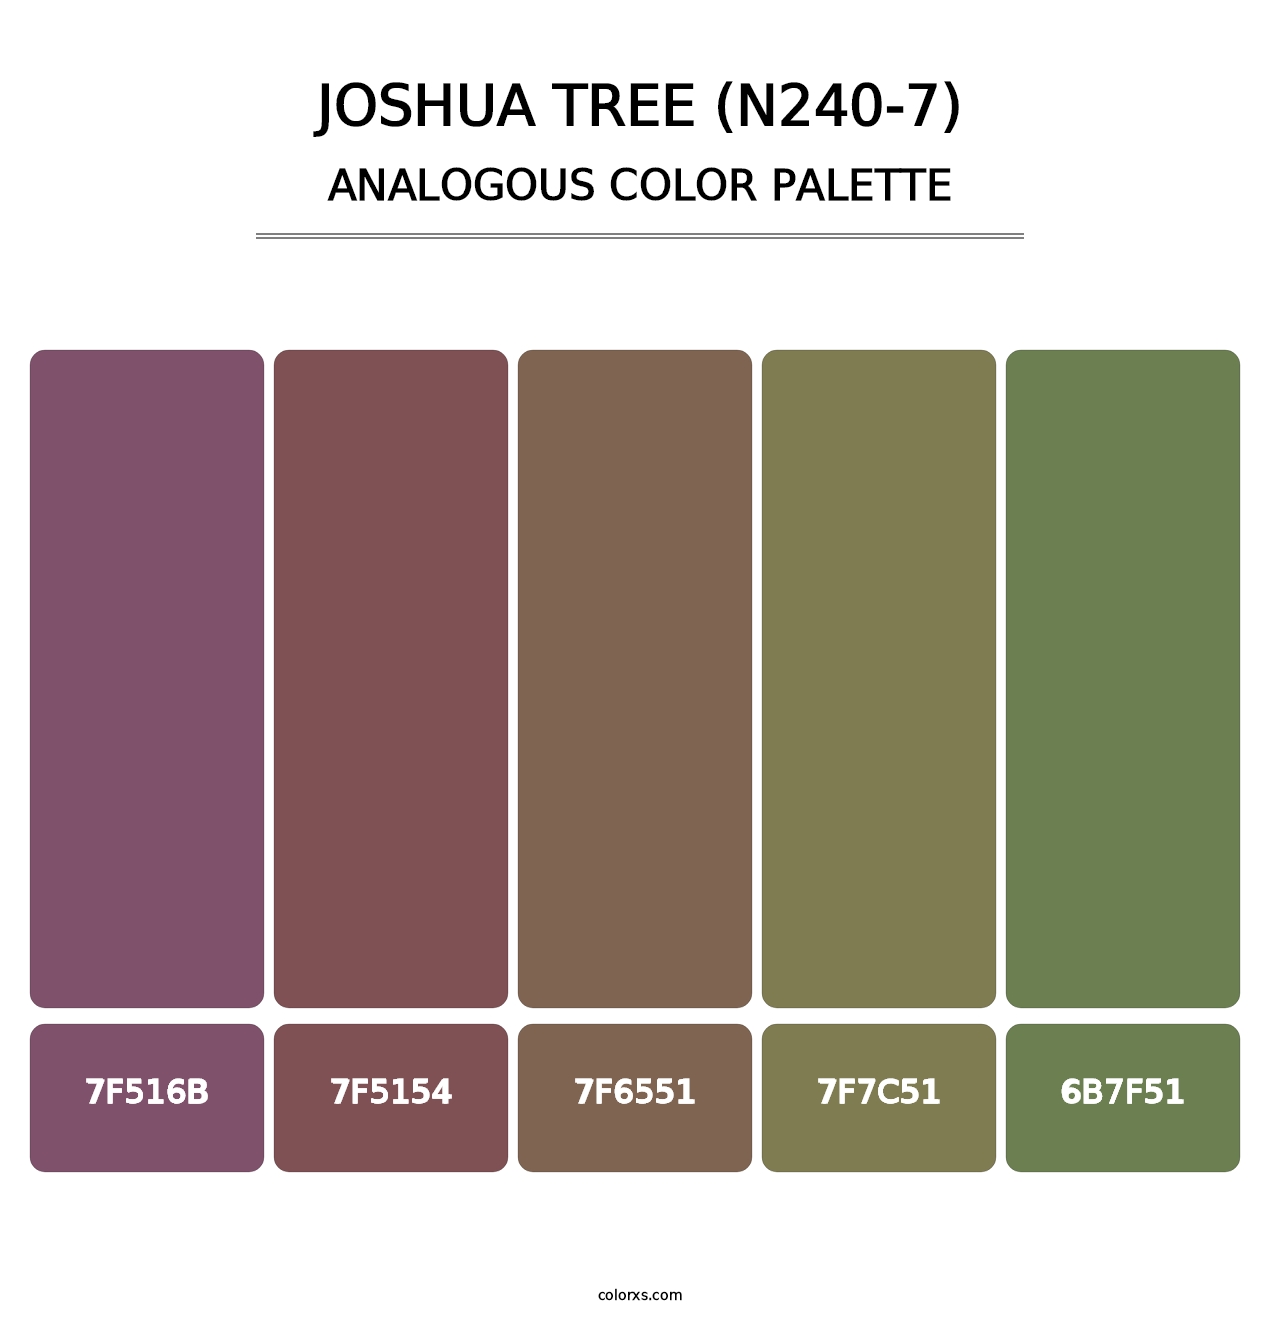 Joshua Tree (N240-7) - Analogous Color Palette